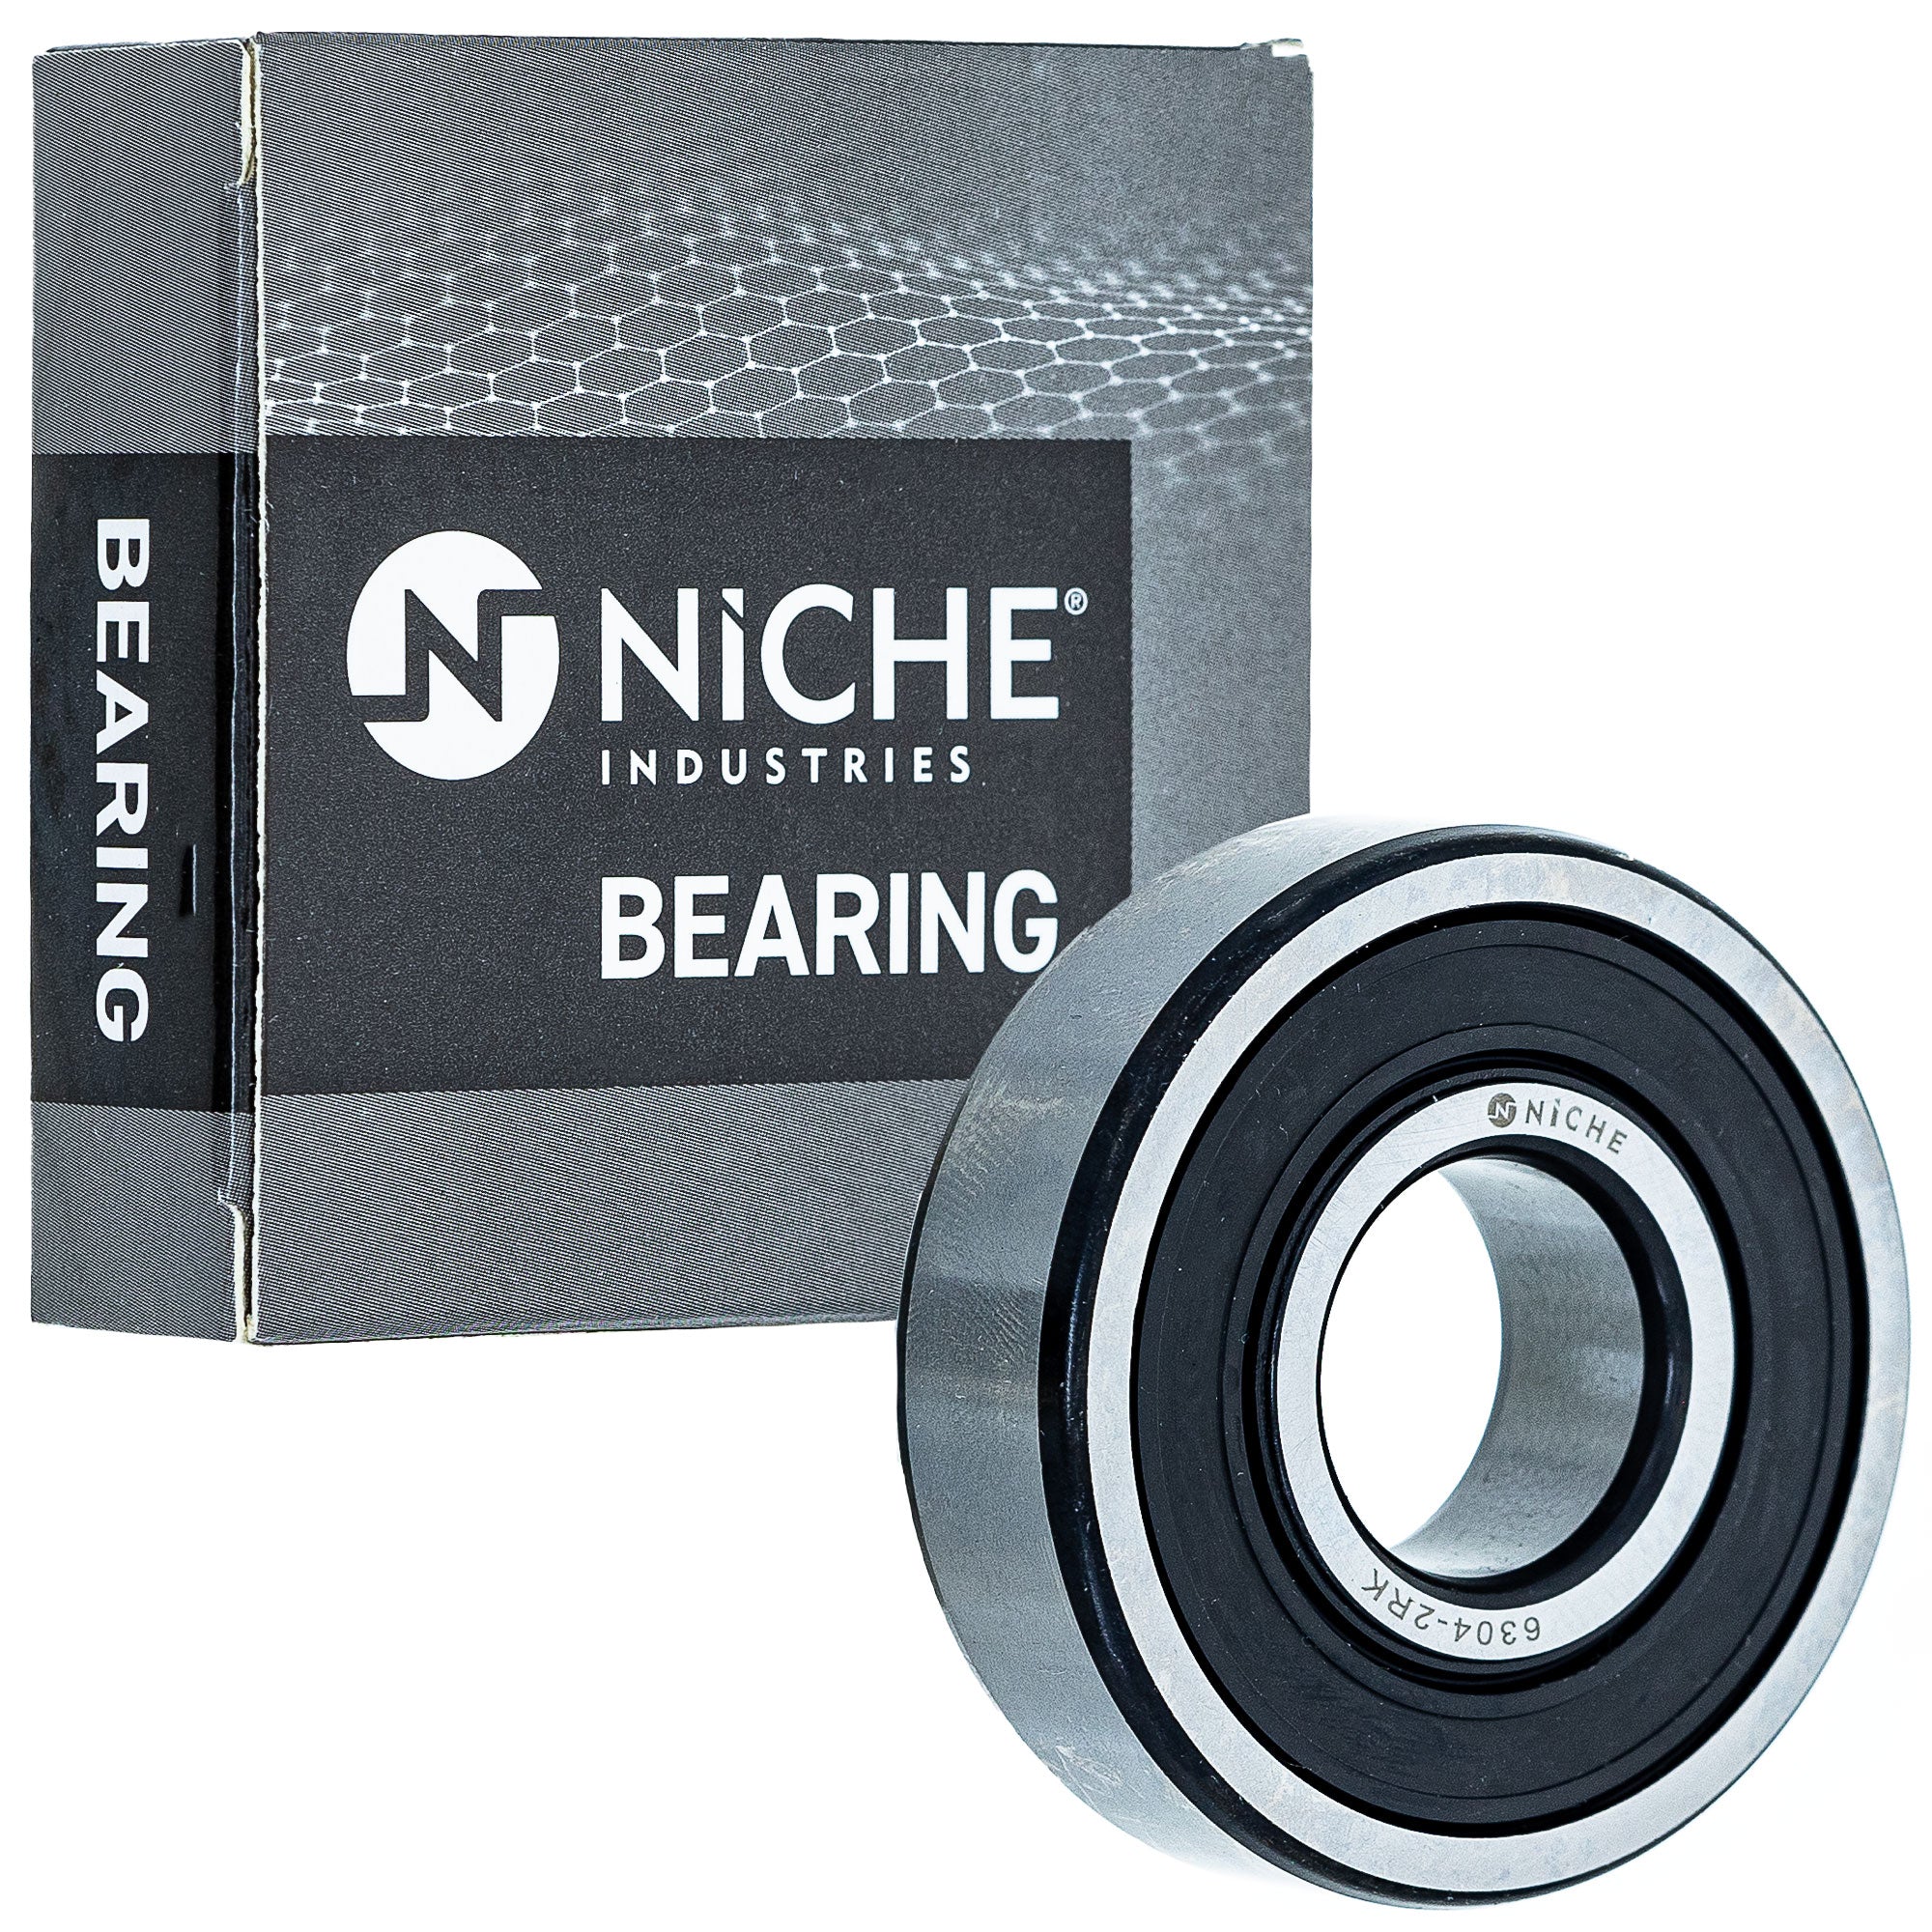 NICHE 519-CBB2343R Bearing 10-Pack for zOTHER VTX1800T3 VTX1800T2